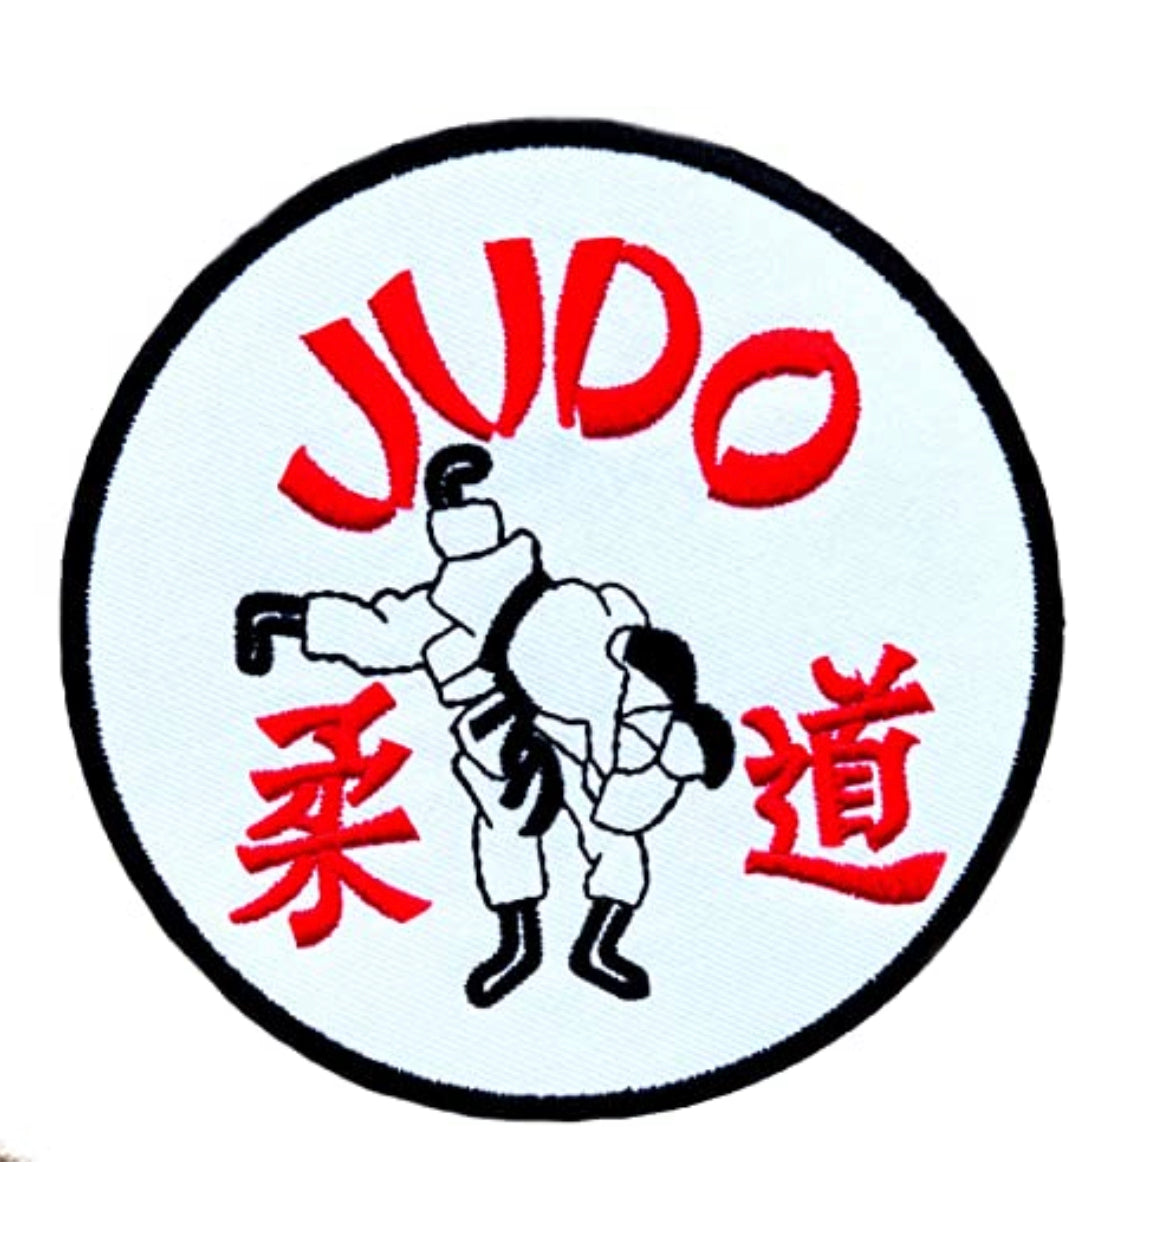 Judo Patch (4 Inch) Embroidered Iron / Sew on Badge Kimono Gi